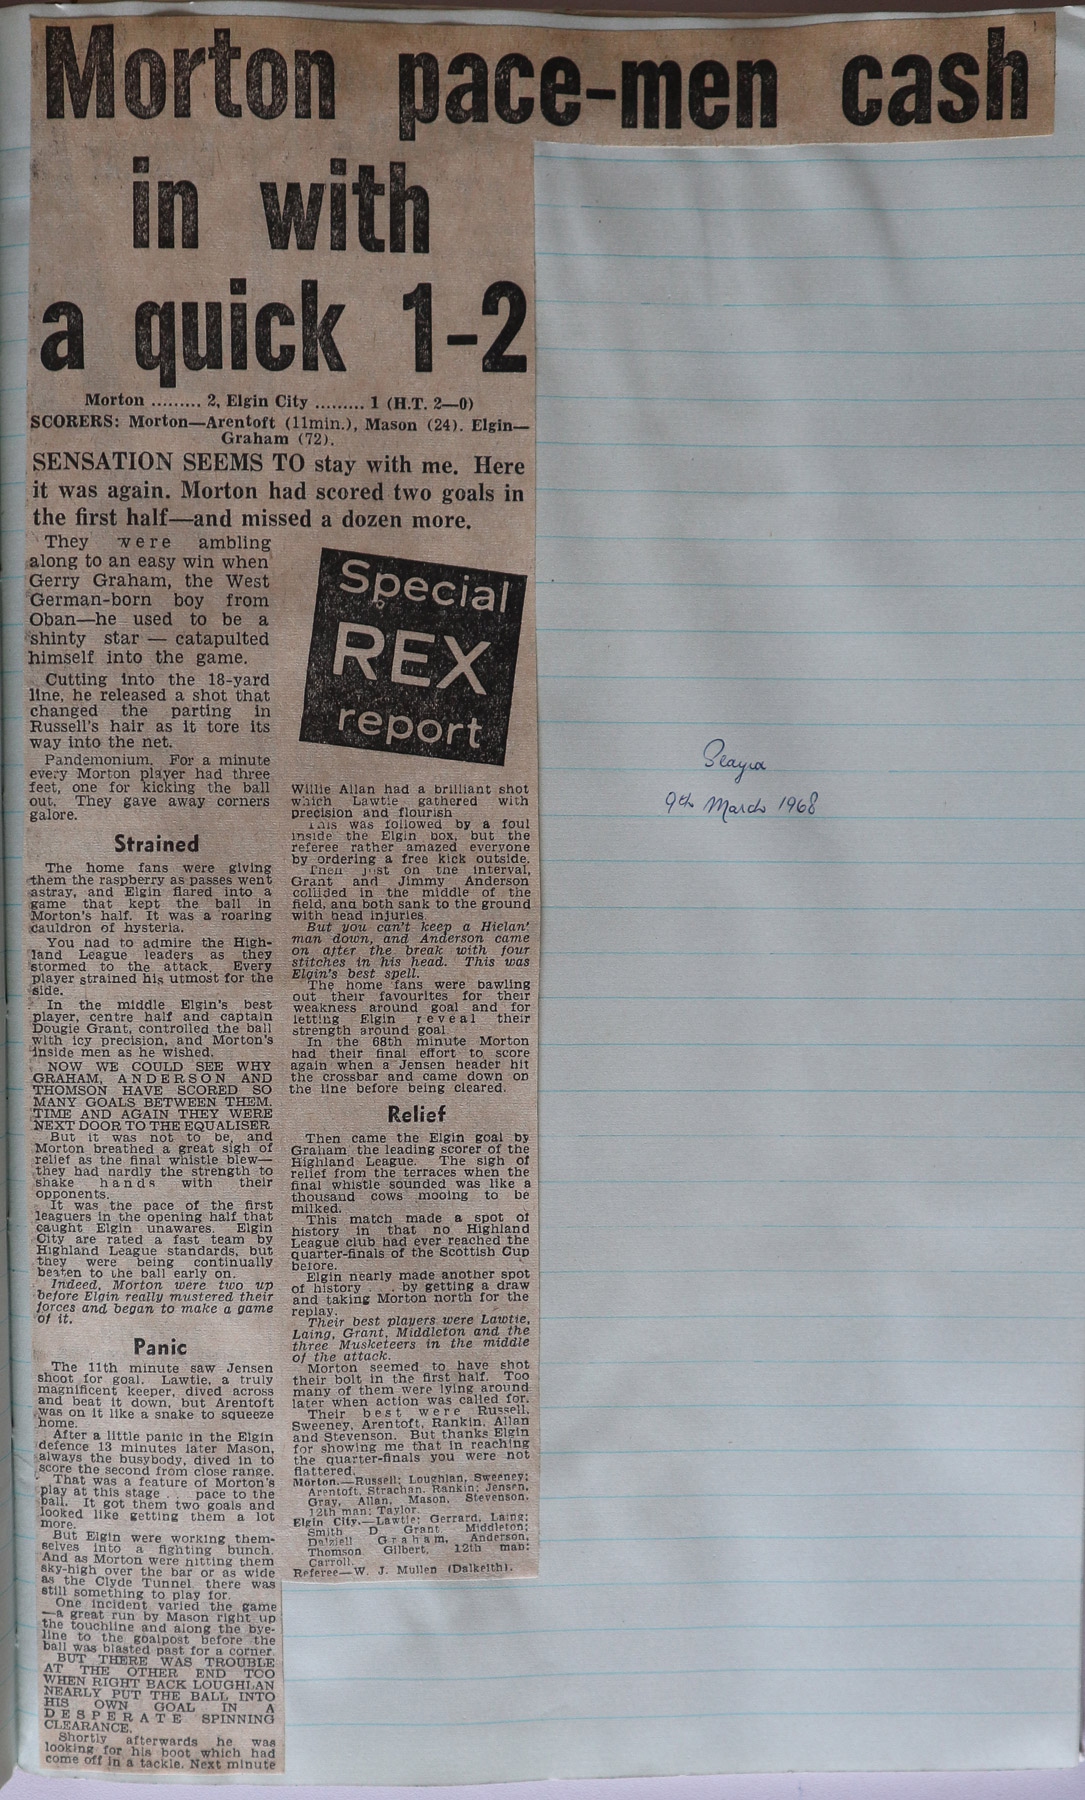 1968-03-09_Greenock_Morton_2-1_Elgin_City_Scottish_Cup_R3_1